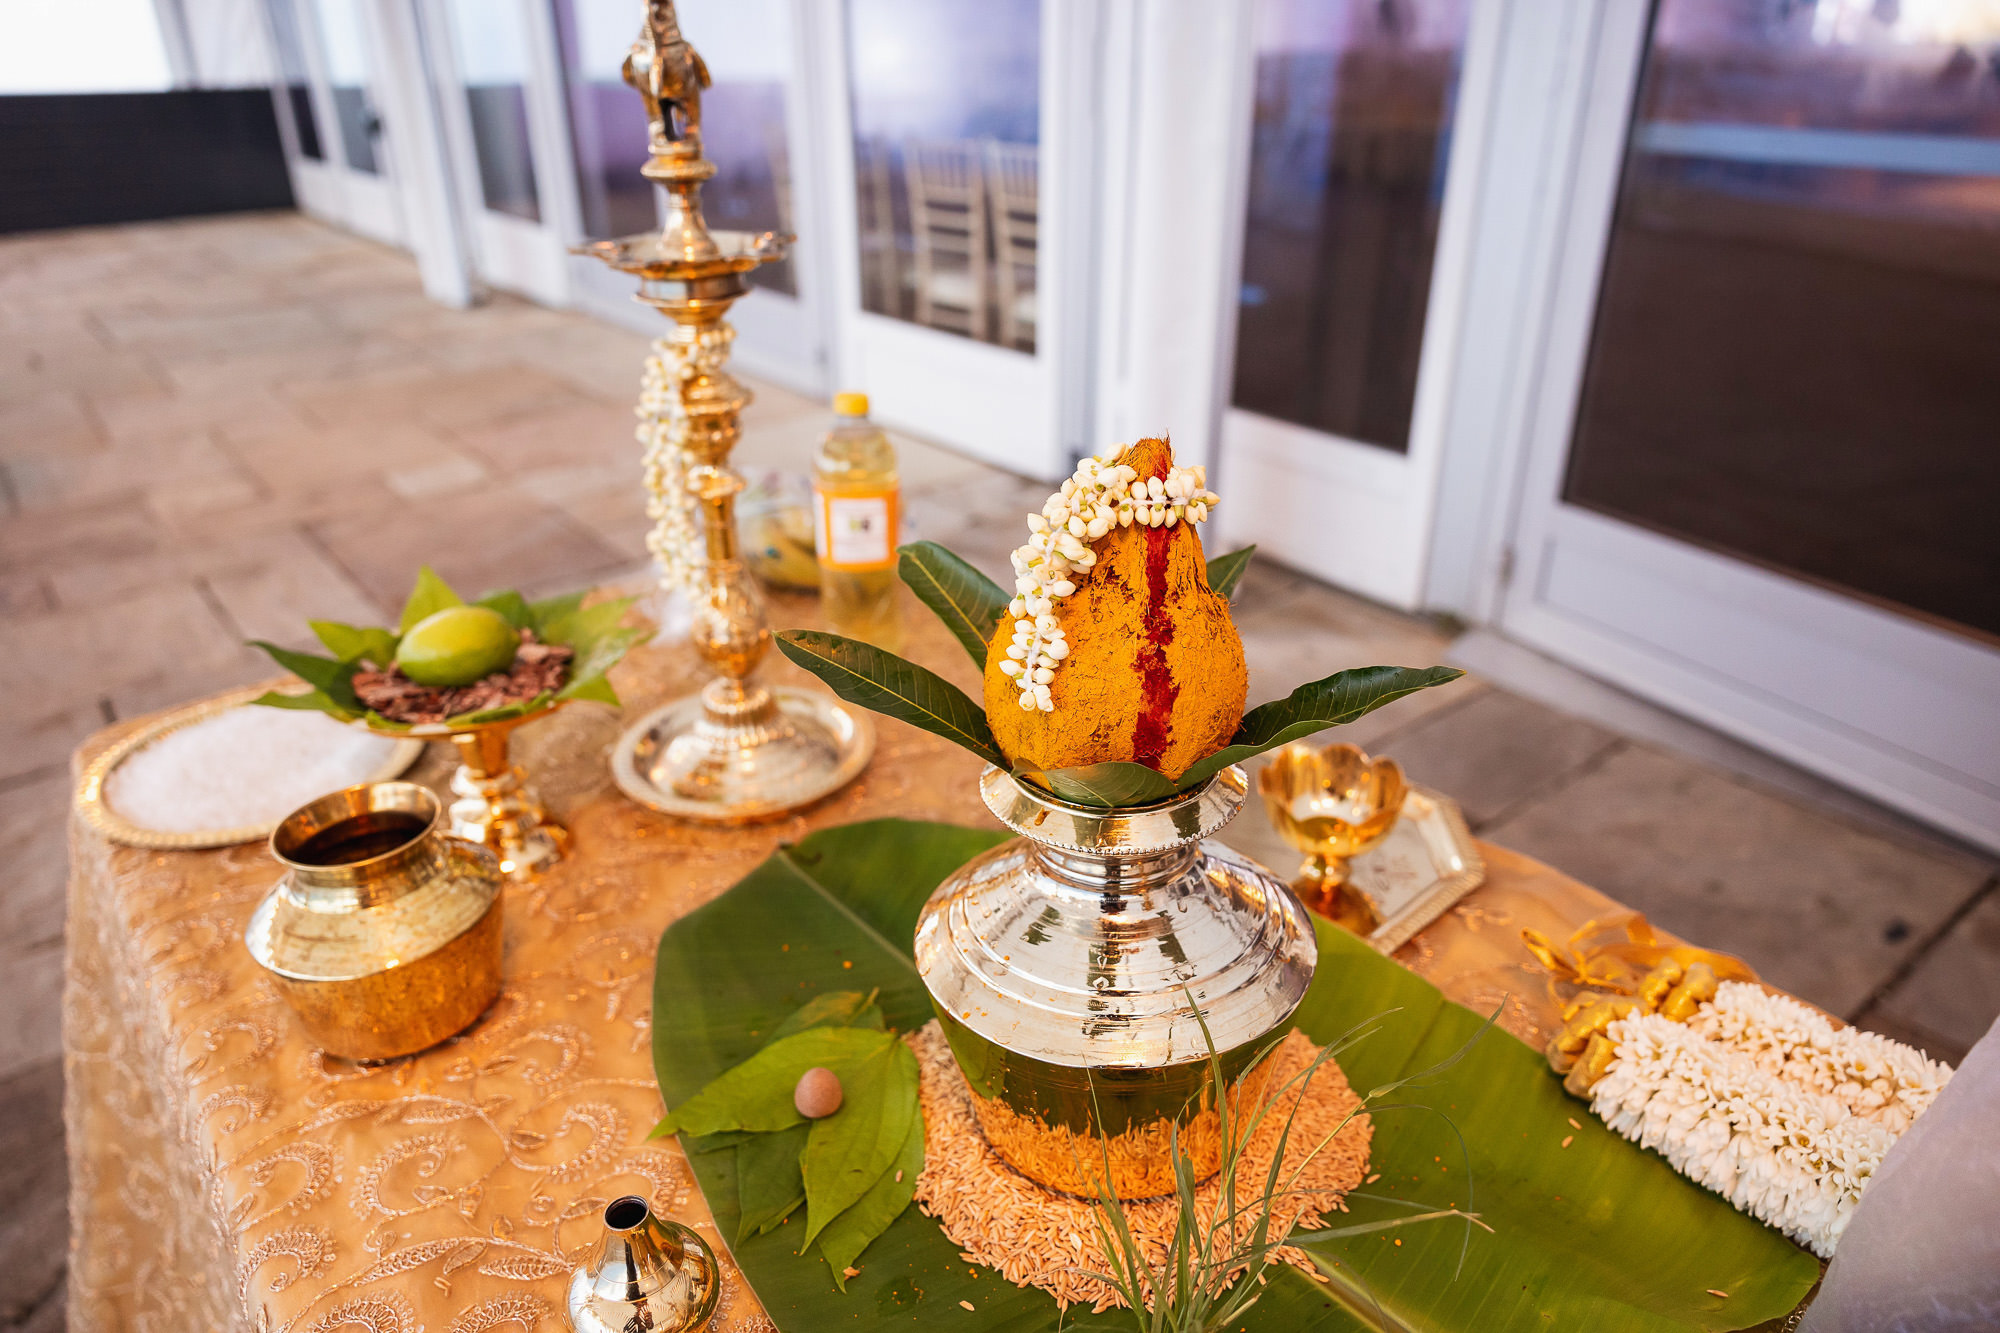 Tamil Wedding, Tamil Wedding Photographer, Stockley Park, Religious ceremony, decor setup